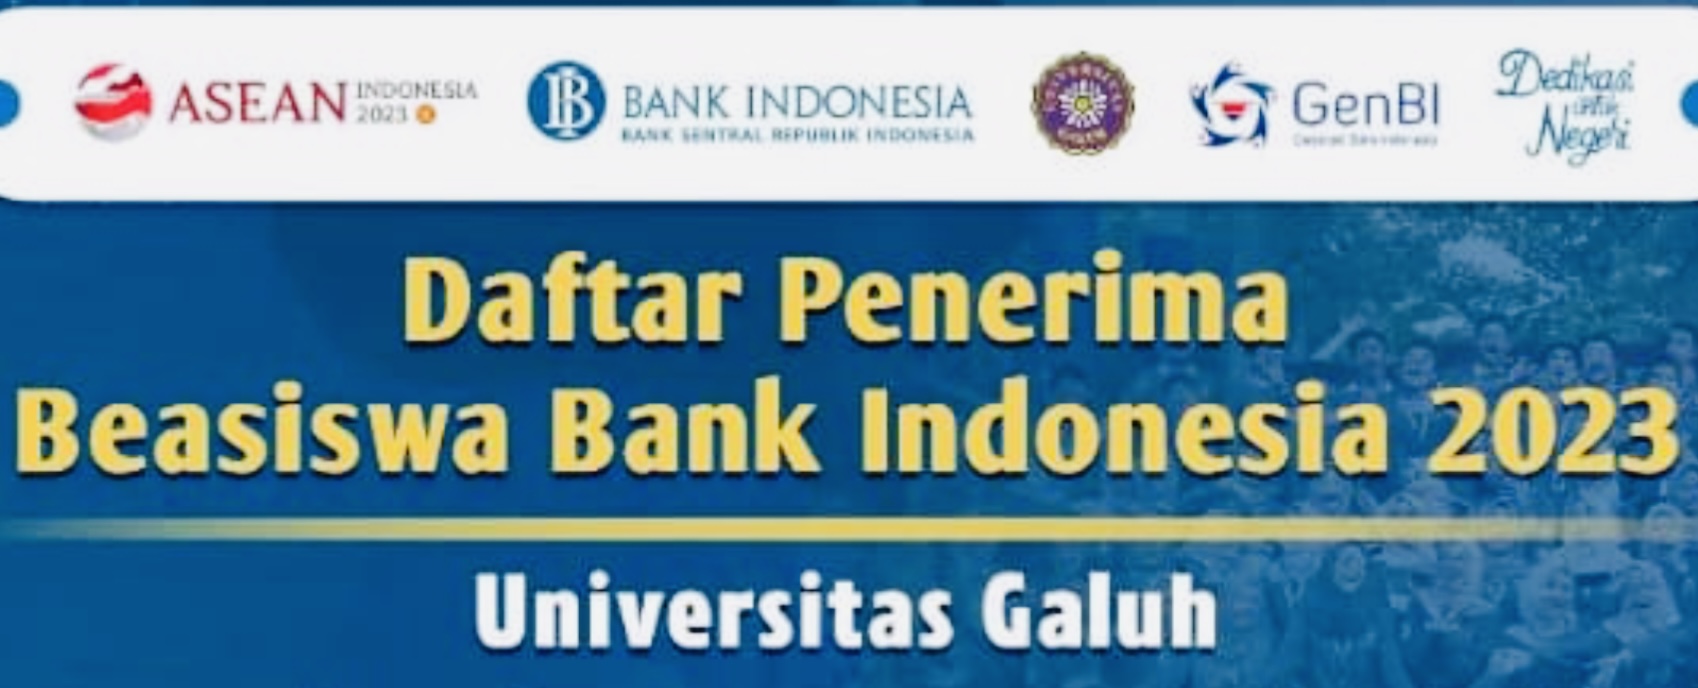 Cek Yuk Daftar Nama-Nama Mahasiswa Universitas Galuh Penerima Beasiswa Bank Indonesia Tahun 2023